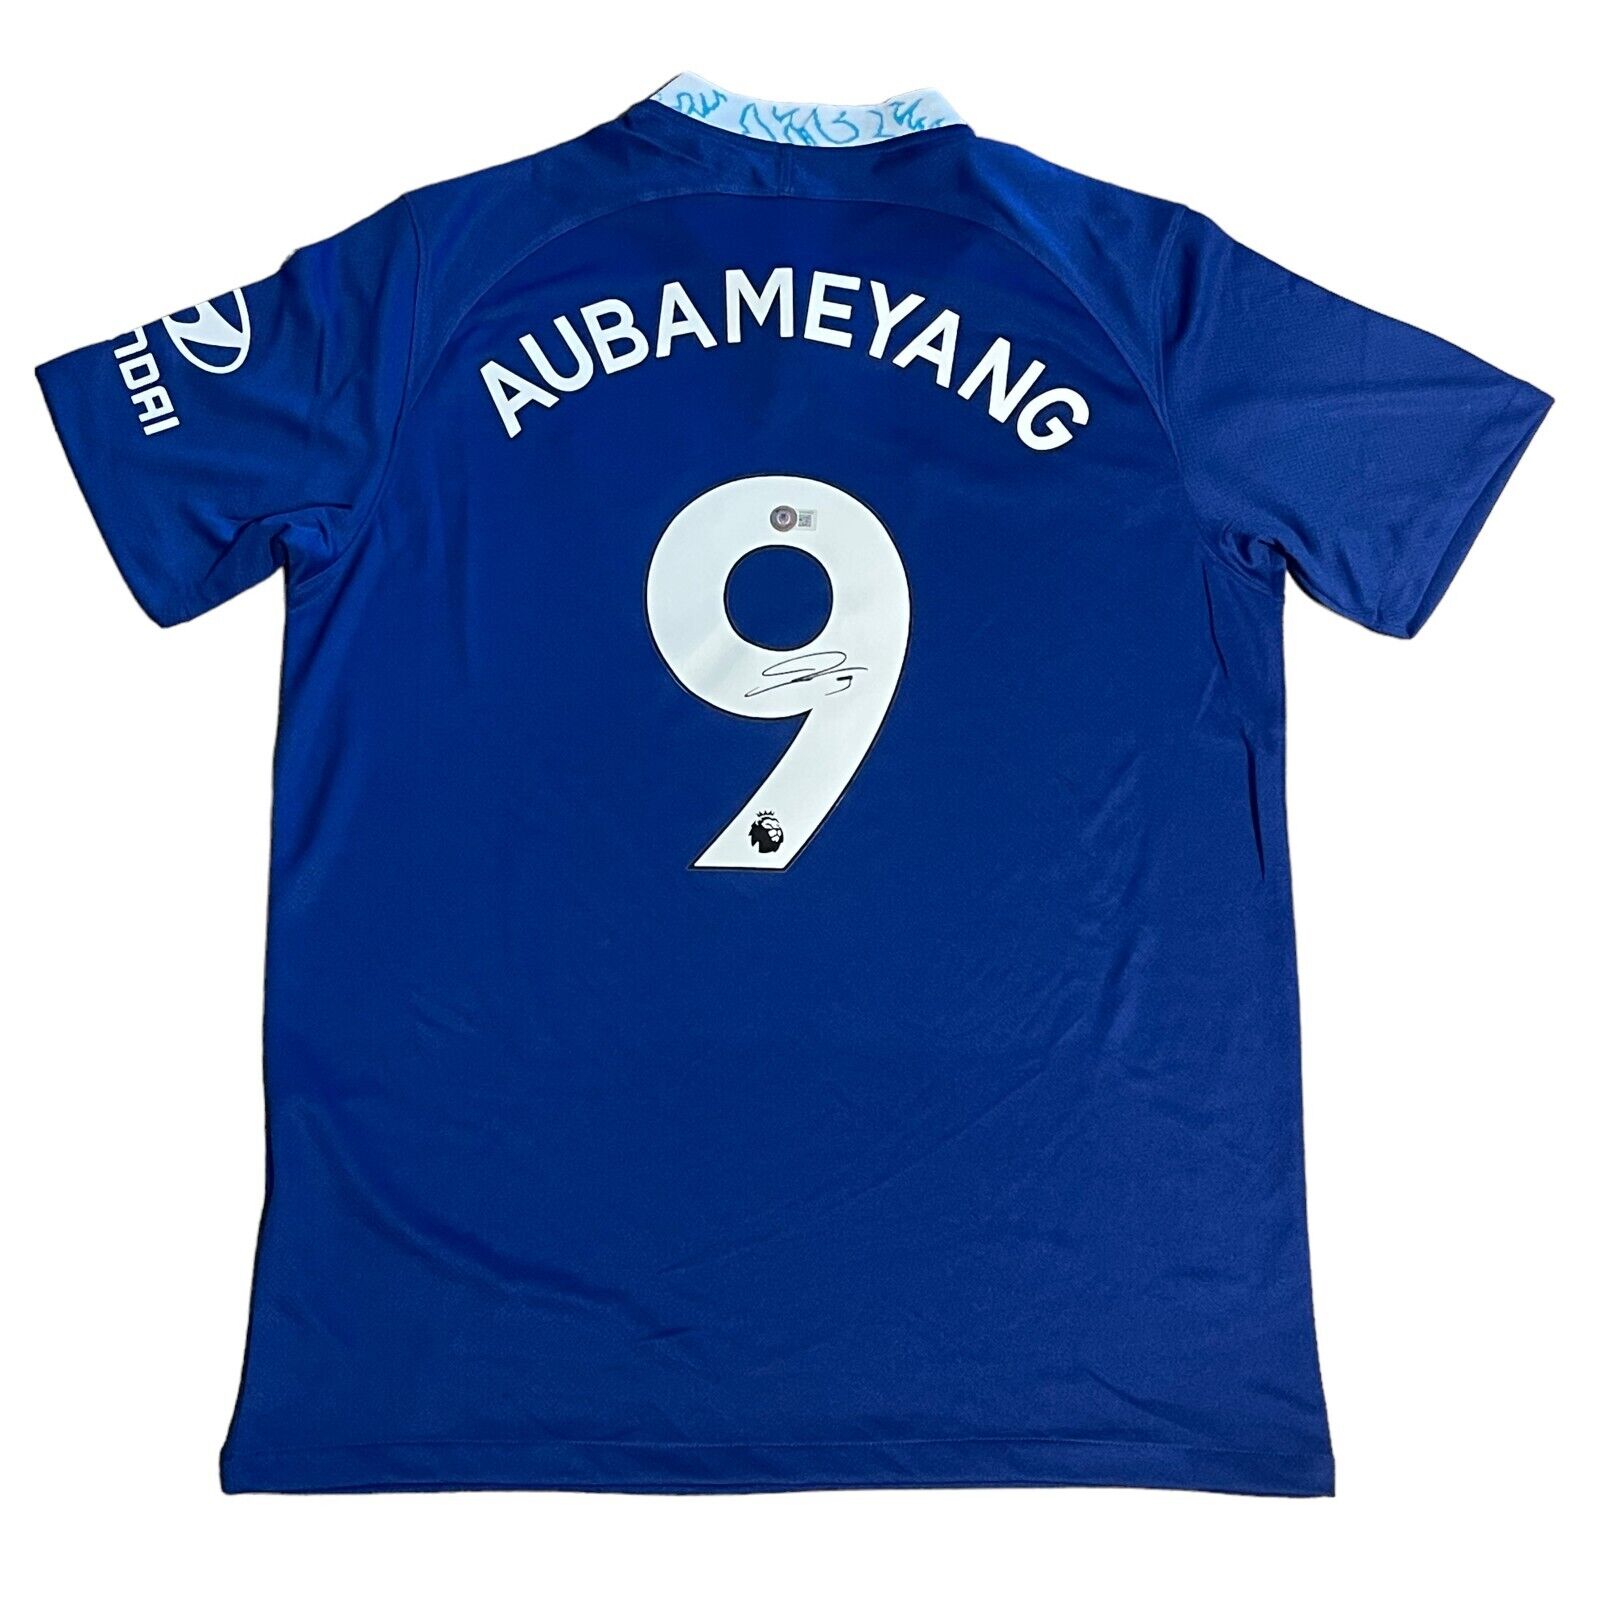 Pierre-Emerick Aubameyang Signed Chelsea Soccer Jersey AUTO Beckett COA Hologram